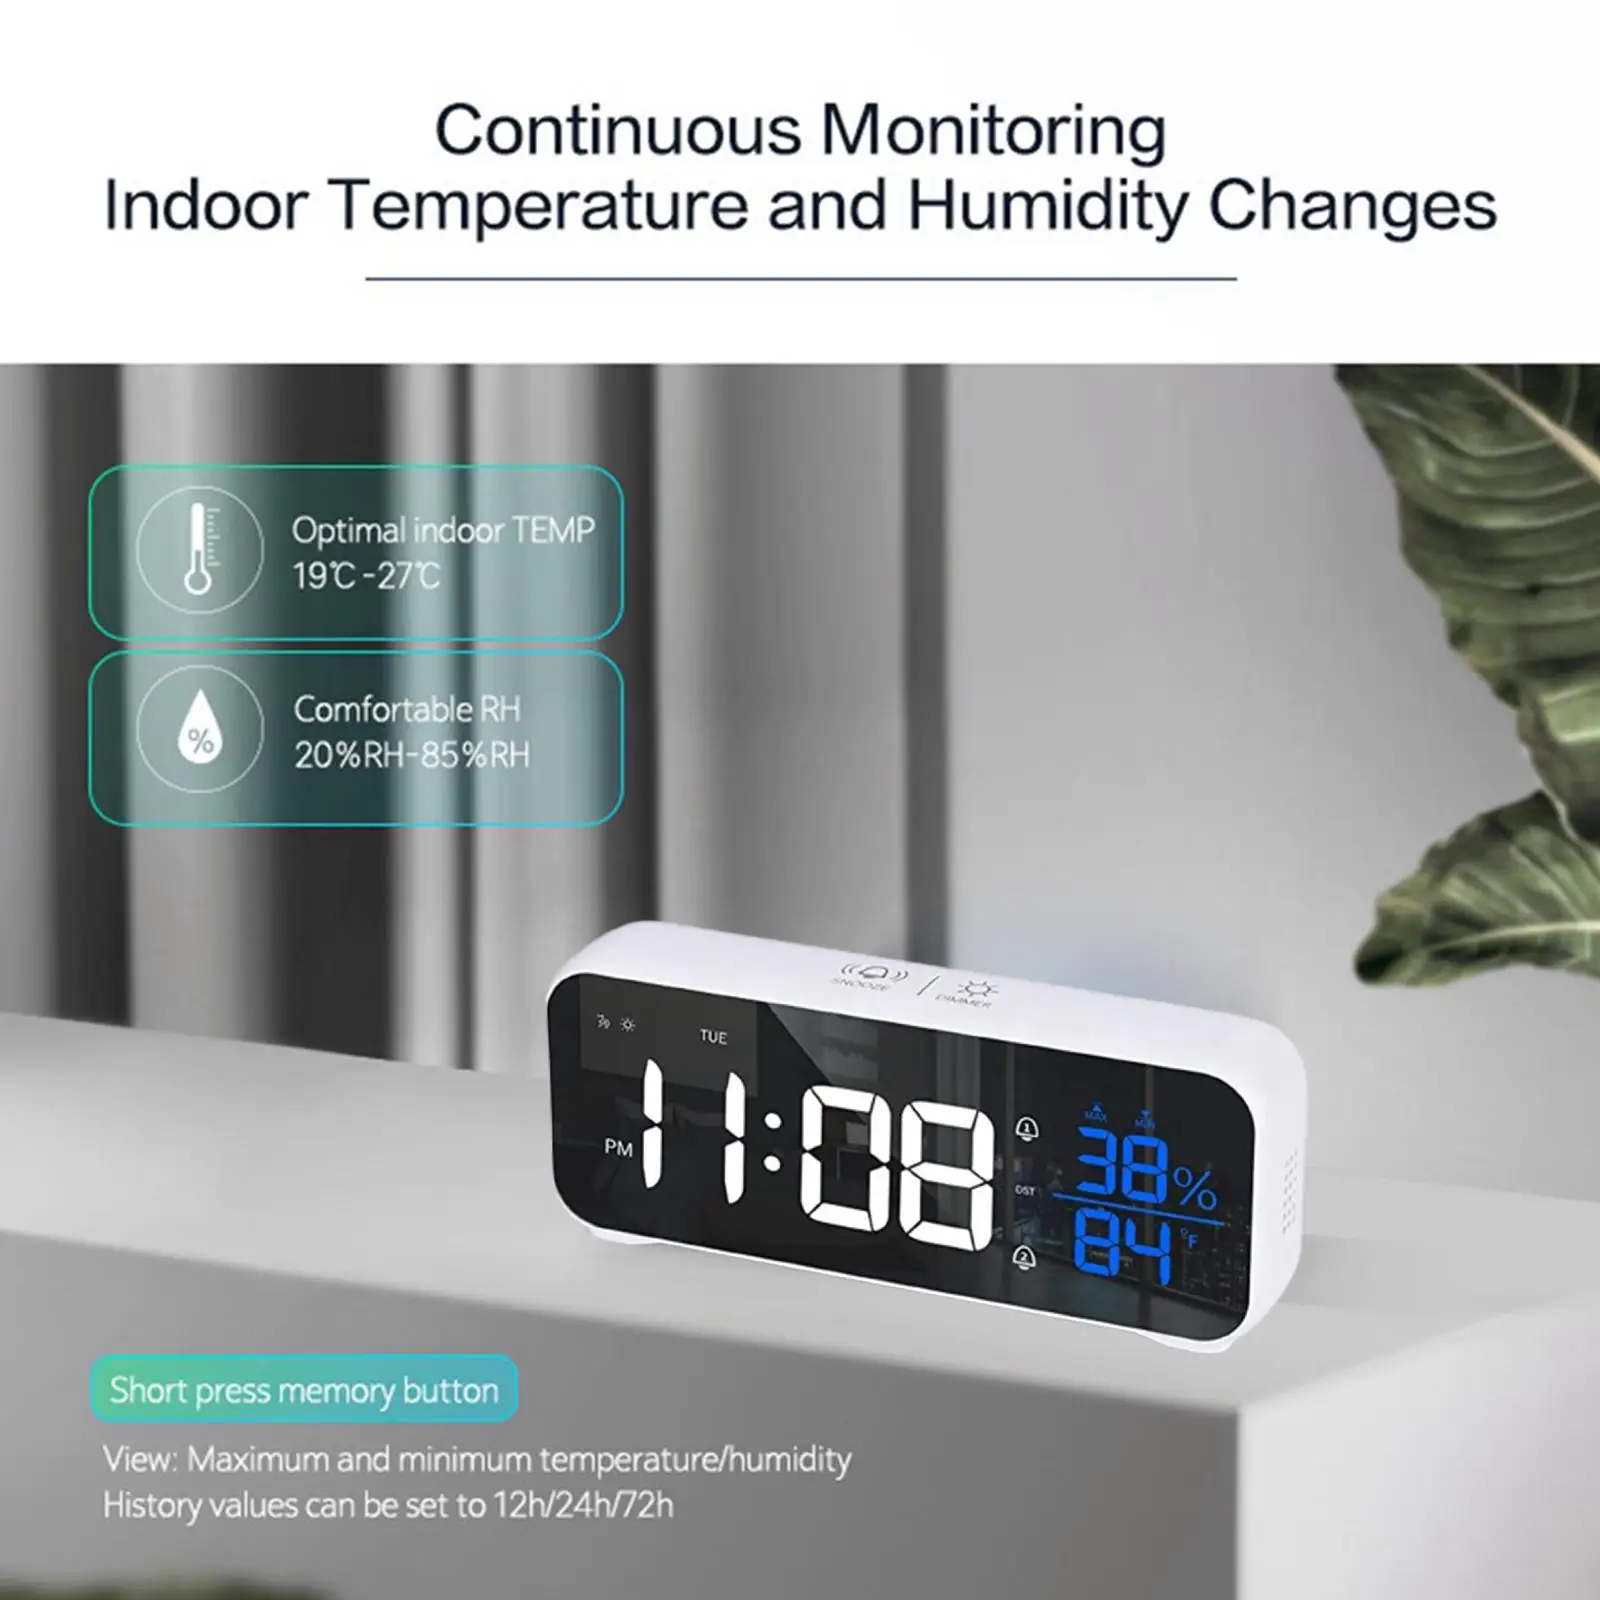 Music Digital Alarm Clock Temperature Humidity Display Electronic Alarm Clocks for Bedside Bedroom